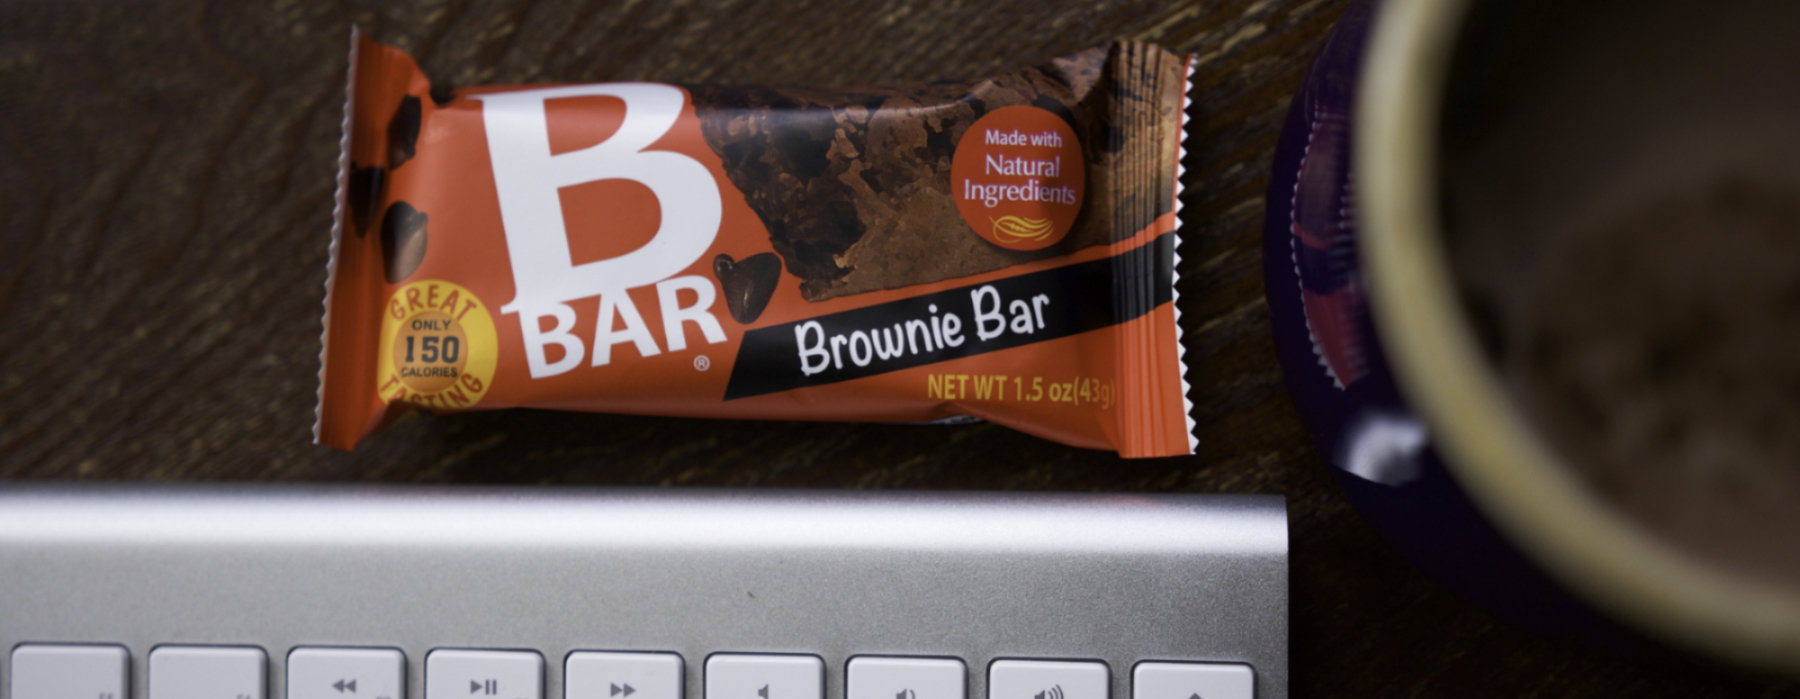 Bbar Brownie bar on a desk next to coffee